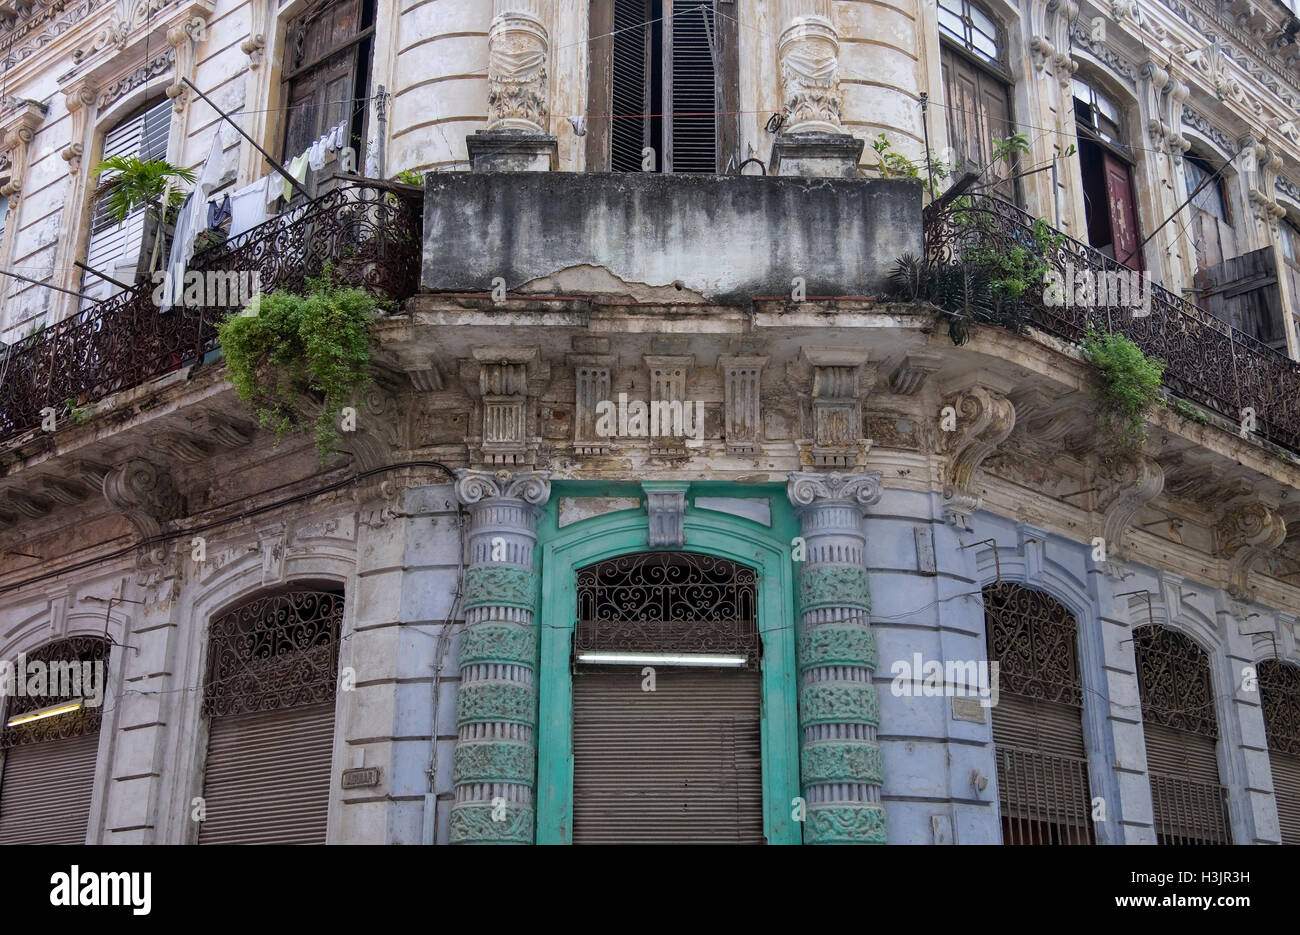 Typical Architecture in the Backstreets of Old Havana, Habana Vieja, Havana, Cuba Stock Photo